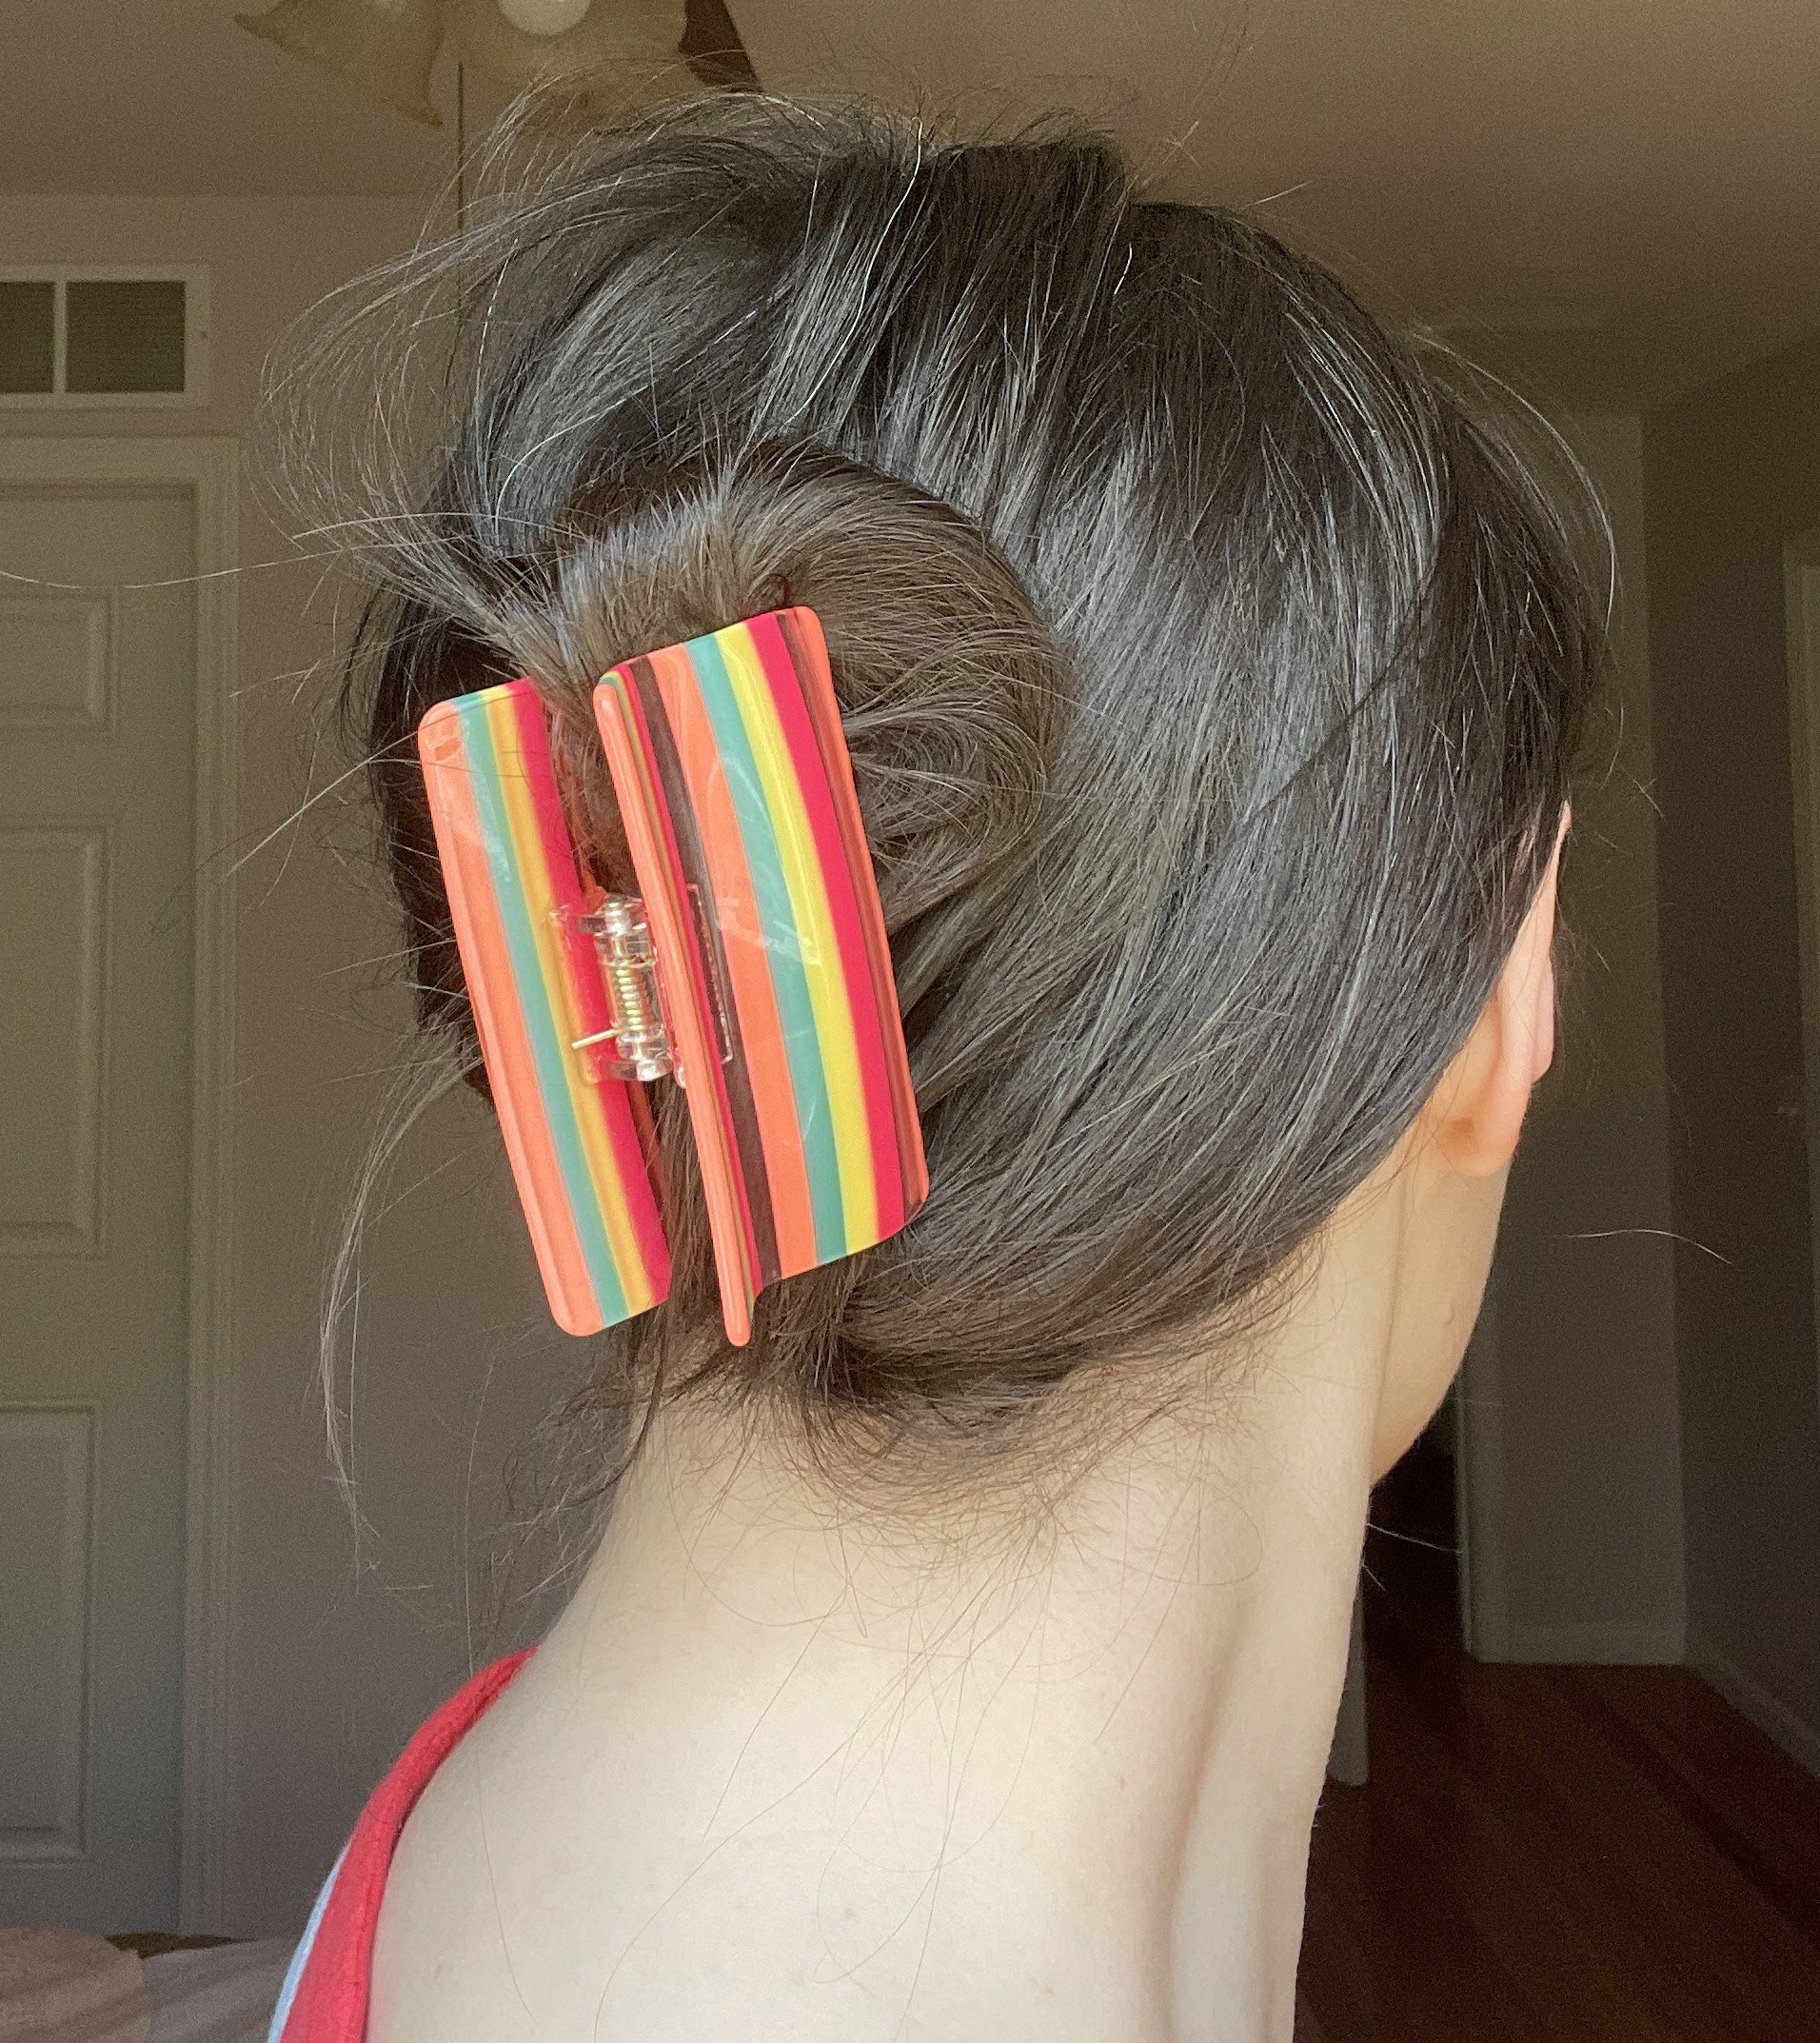 buzzfeed editor&#x27;s hair twisted into a rainbow stripe claw clip